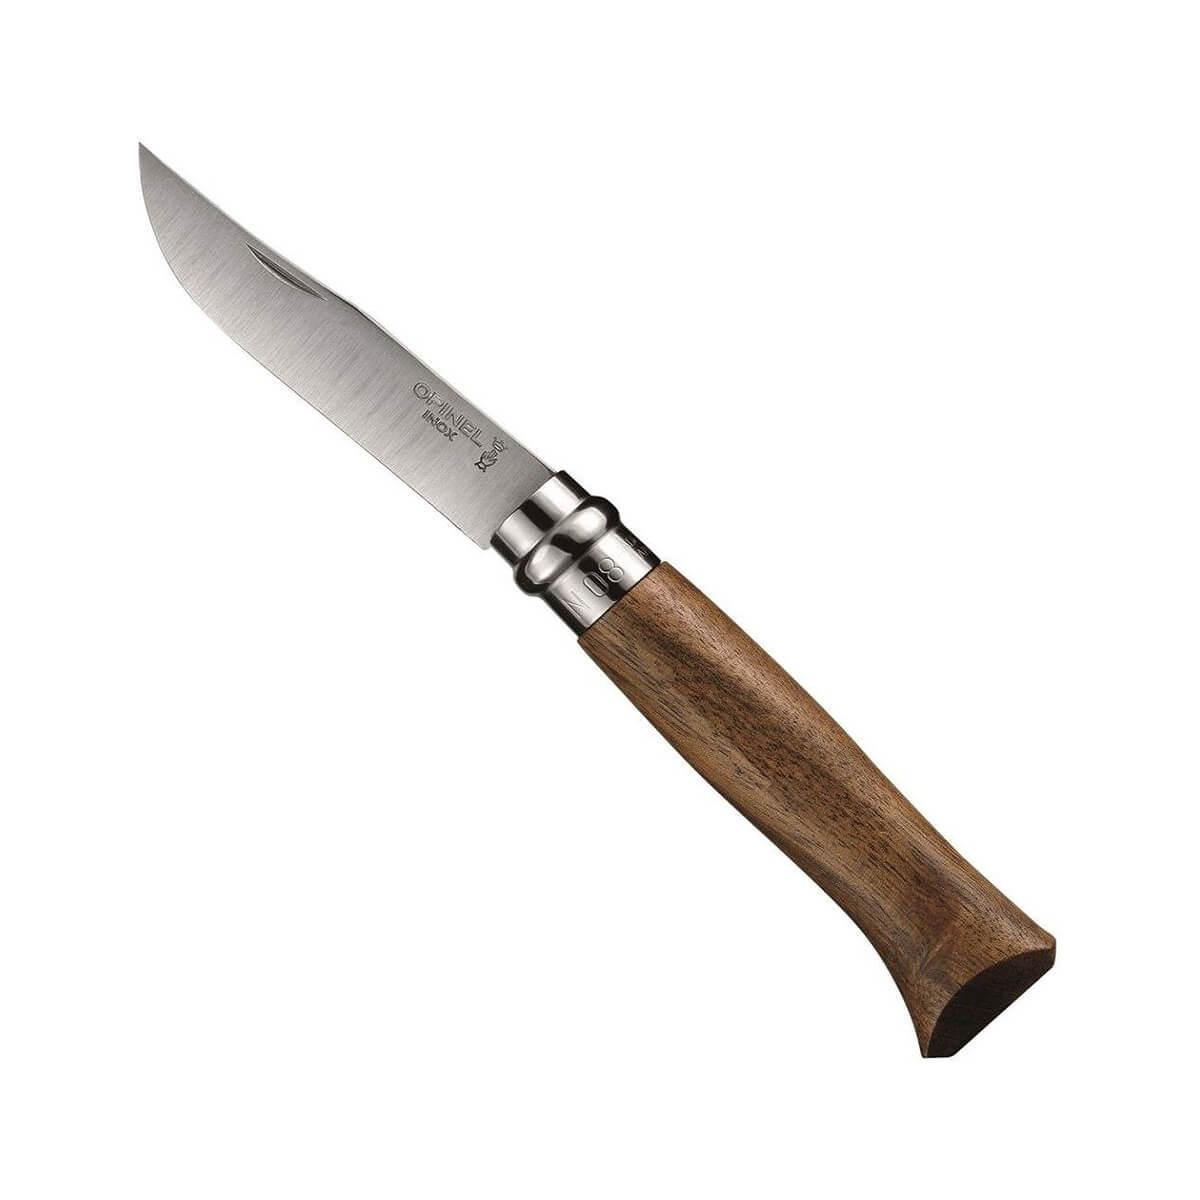  No.08 Walnut Stainless Steel Pocket Knife